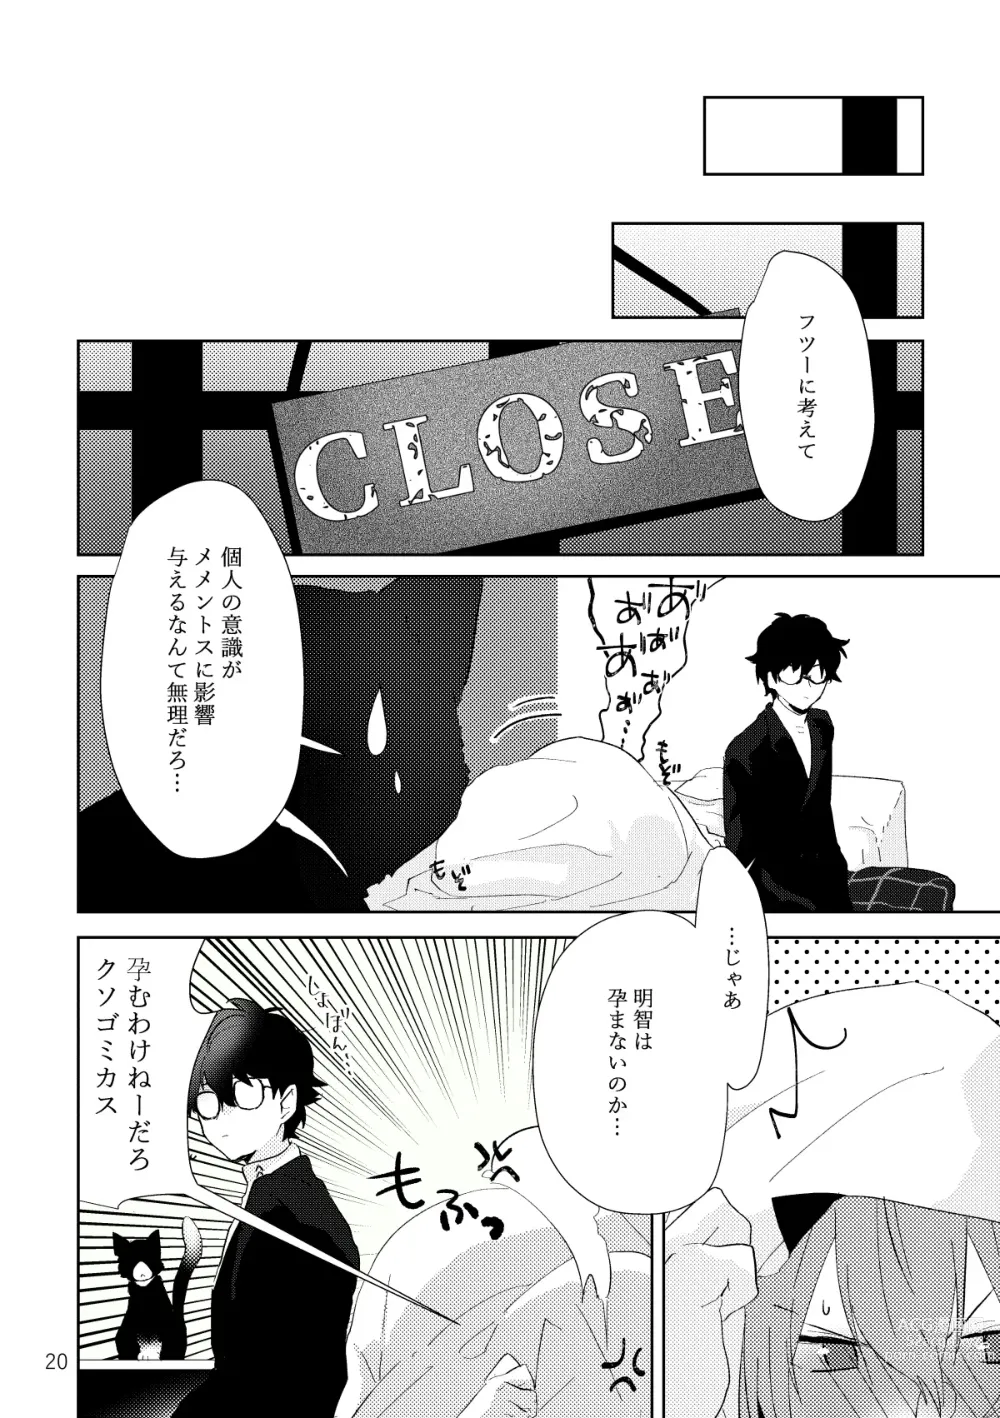 Page 19 of doujinshi Ninchi no chikara tte suge-e!